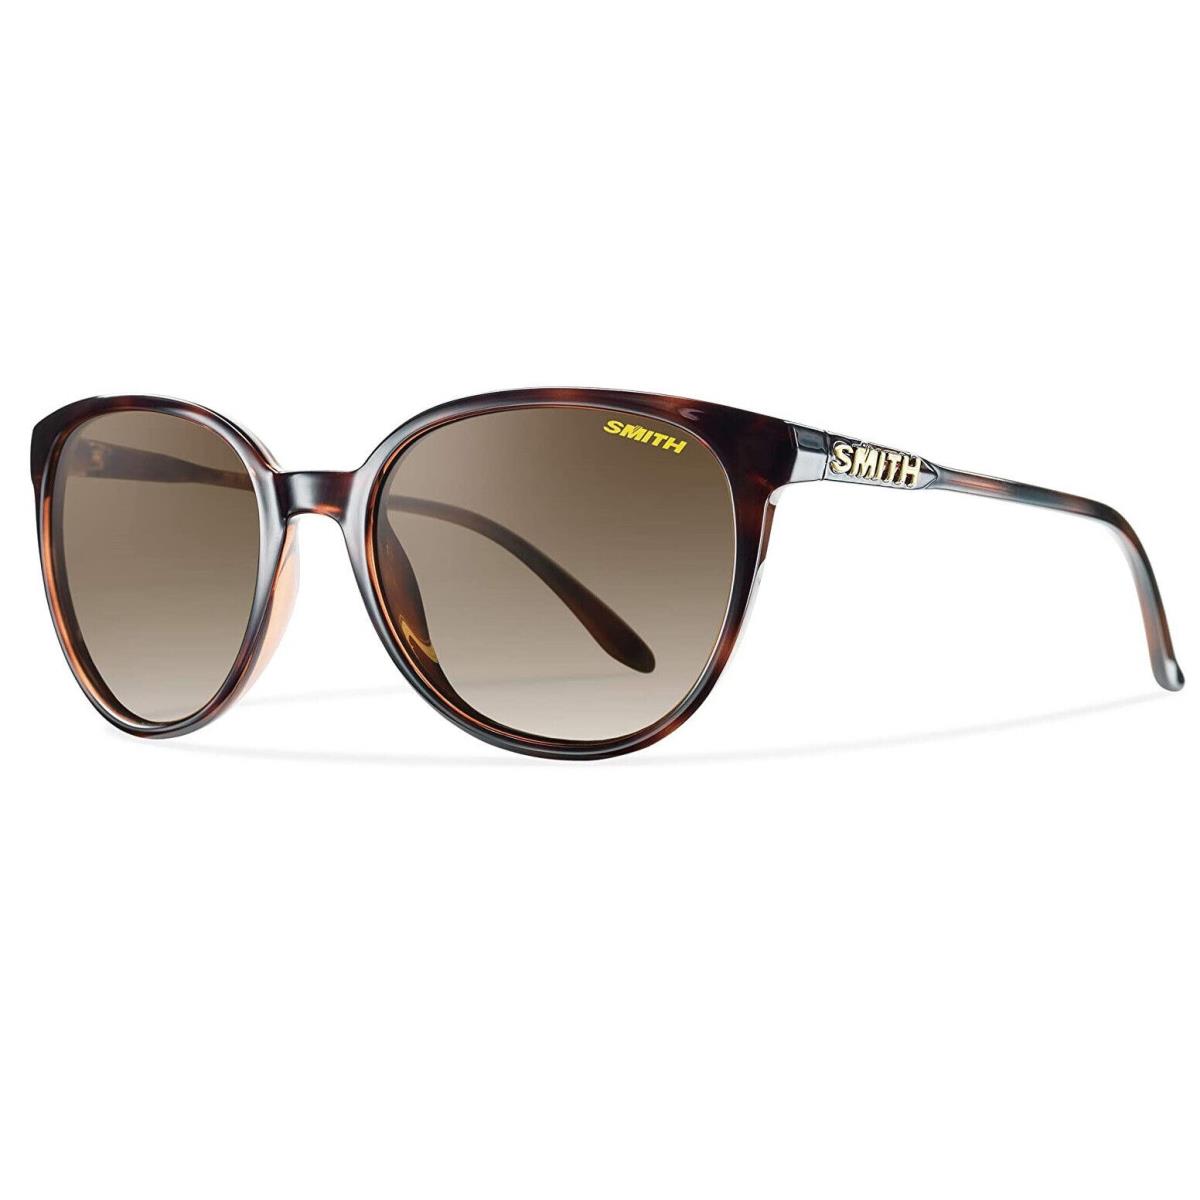 Smith Cheetah Sunglasses - Women`s - Tortoise w/ Polarized Brown Gradient